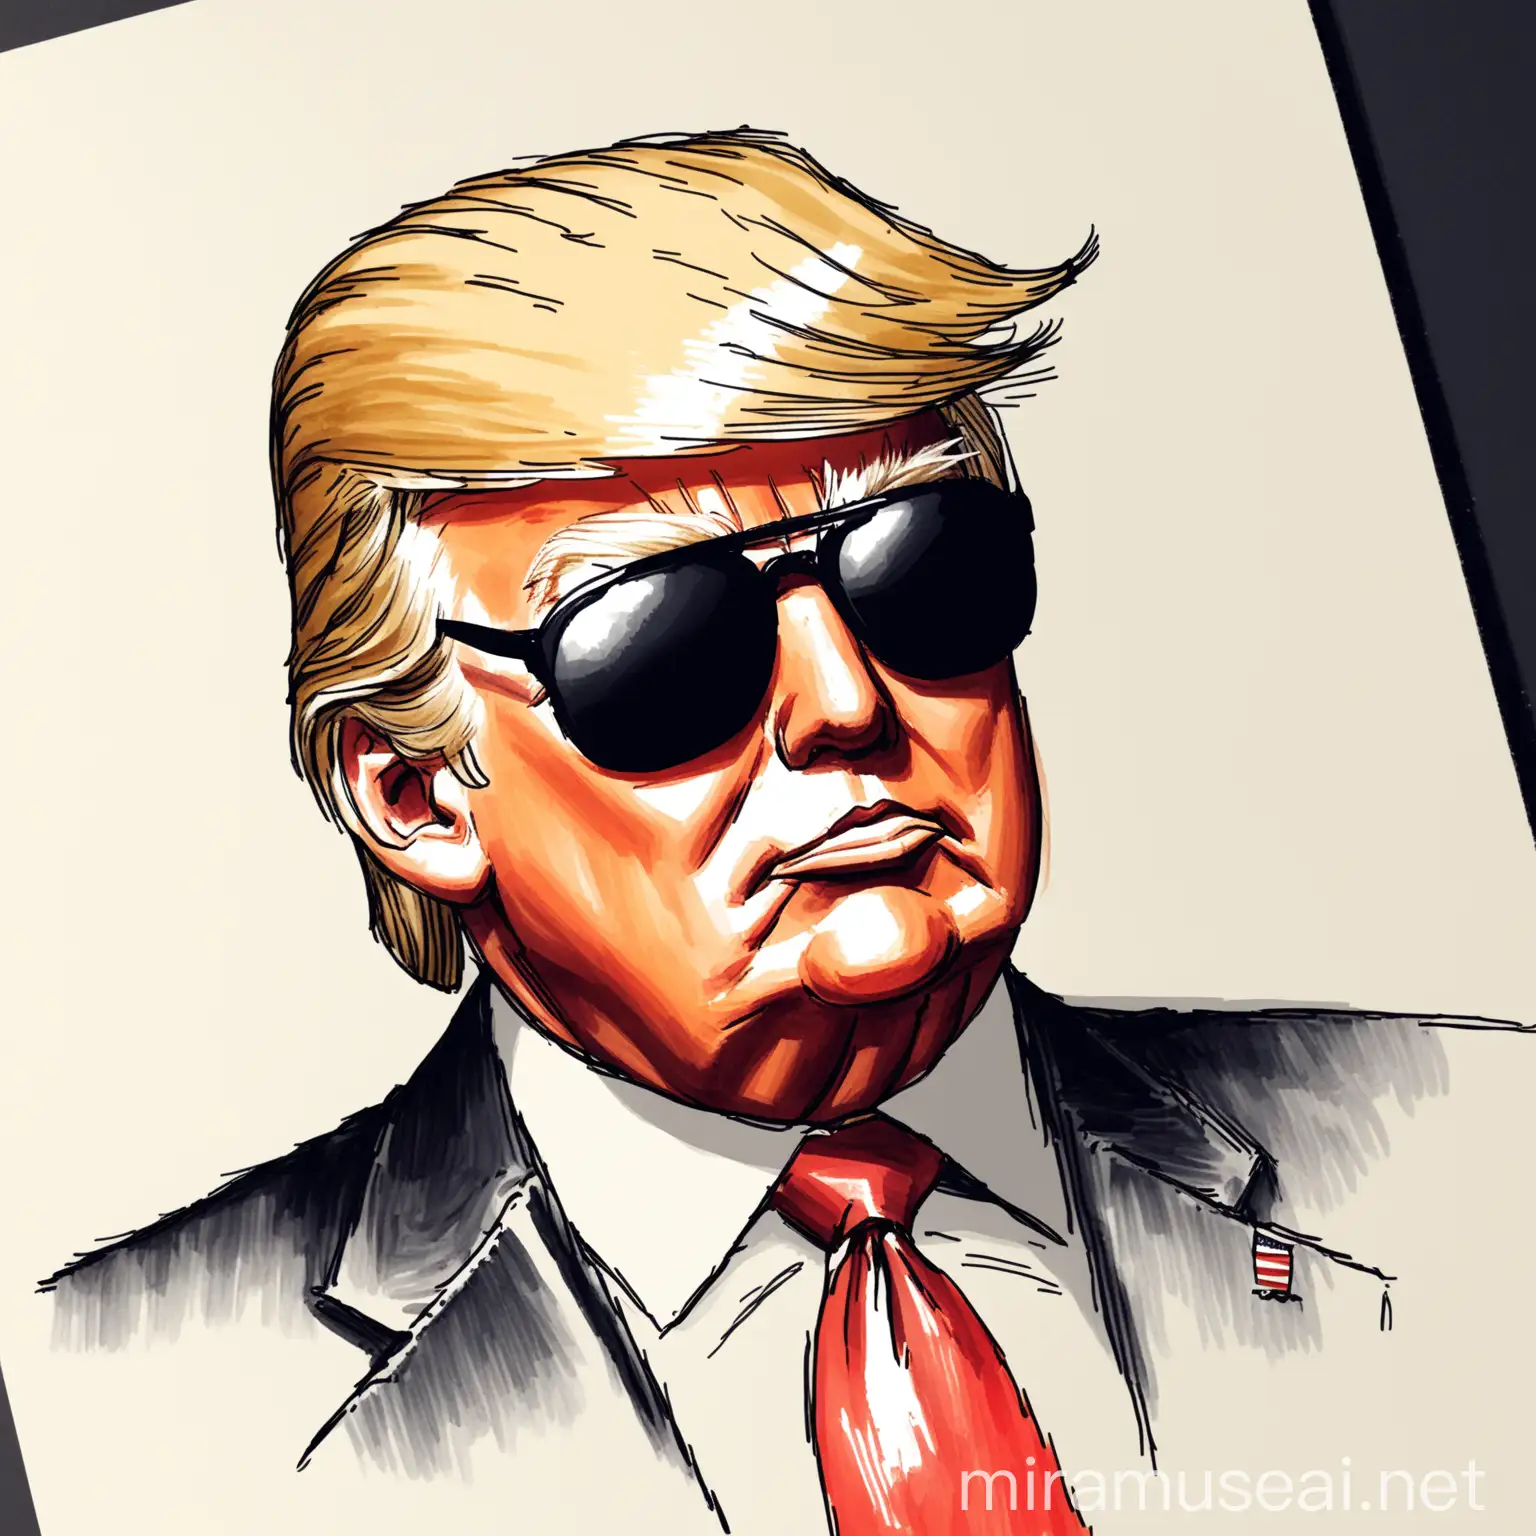 HandDrawn Illustration of Donald Trump Wearing Sunglasses